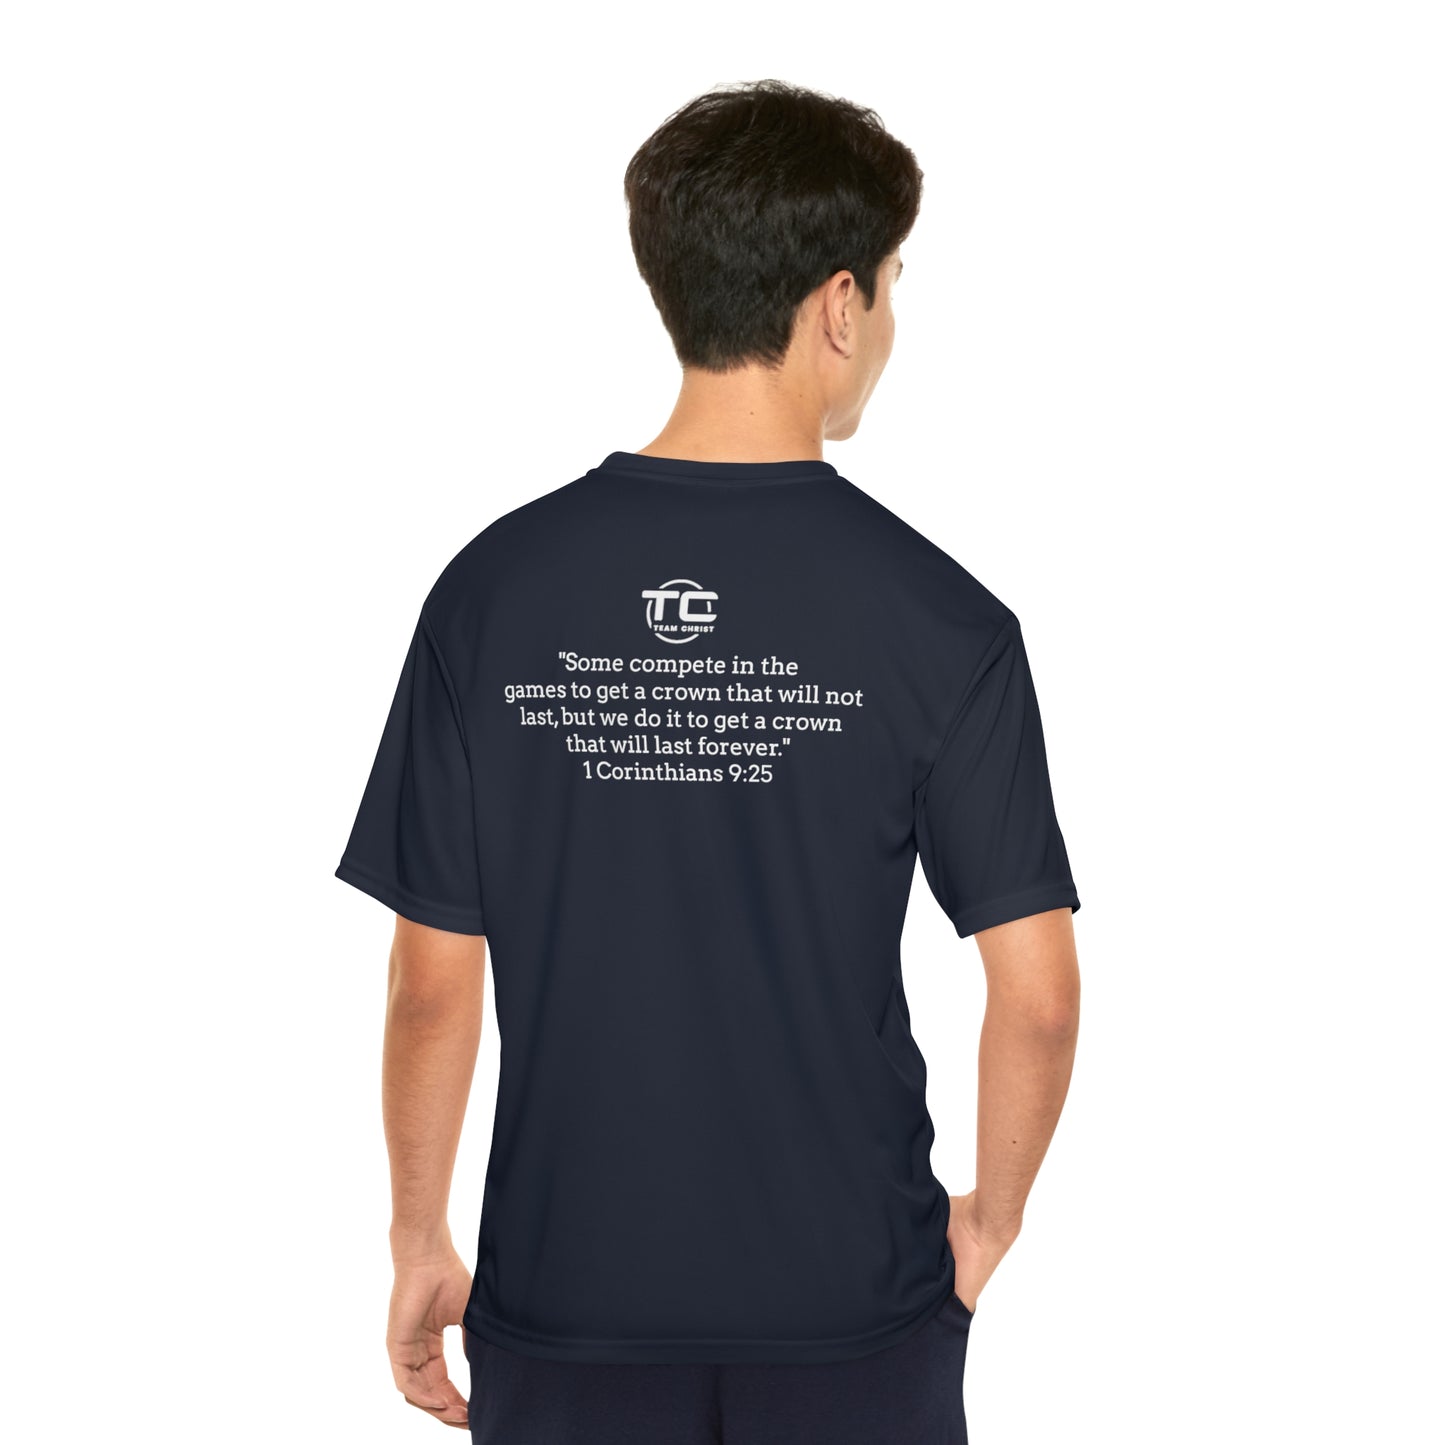 Faith & Sports Custom Men's Performance T-Shirt